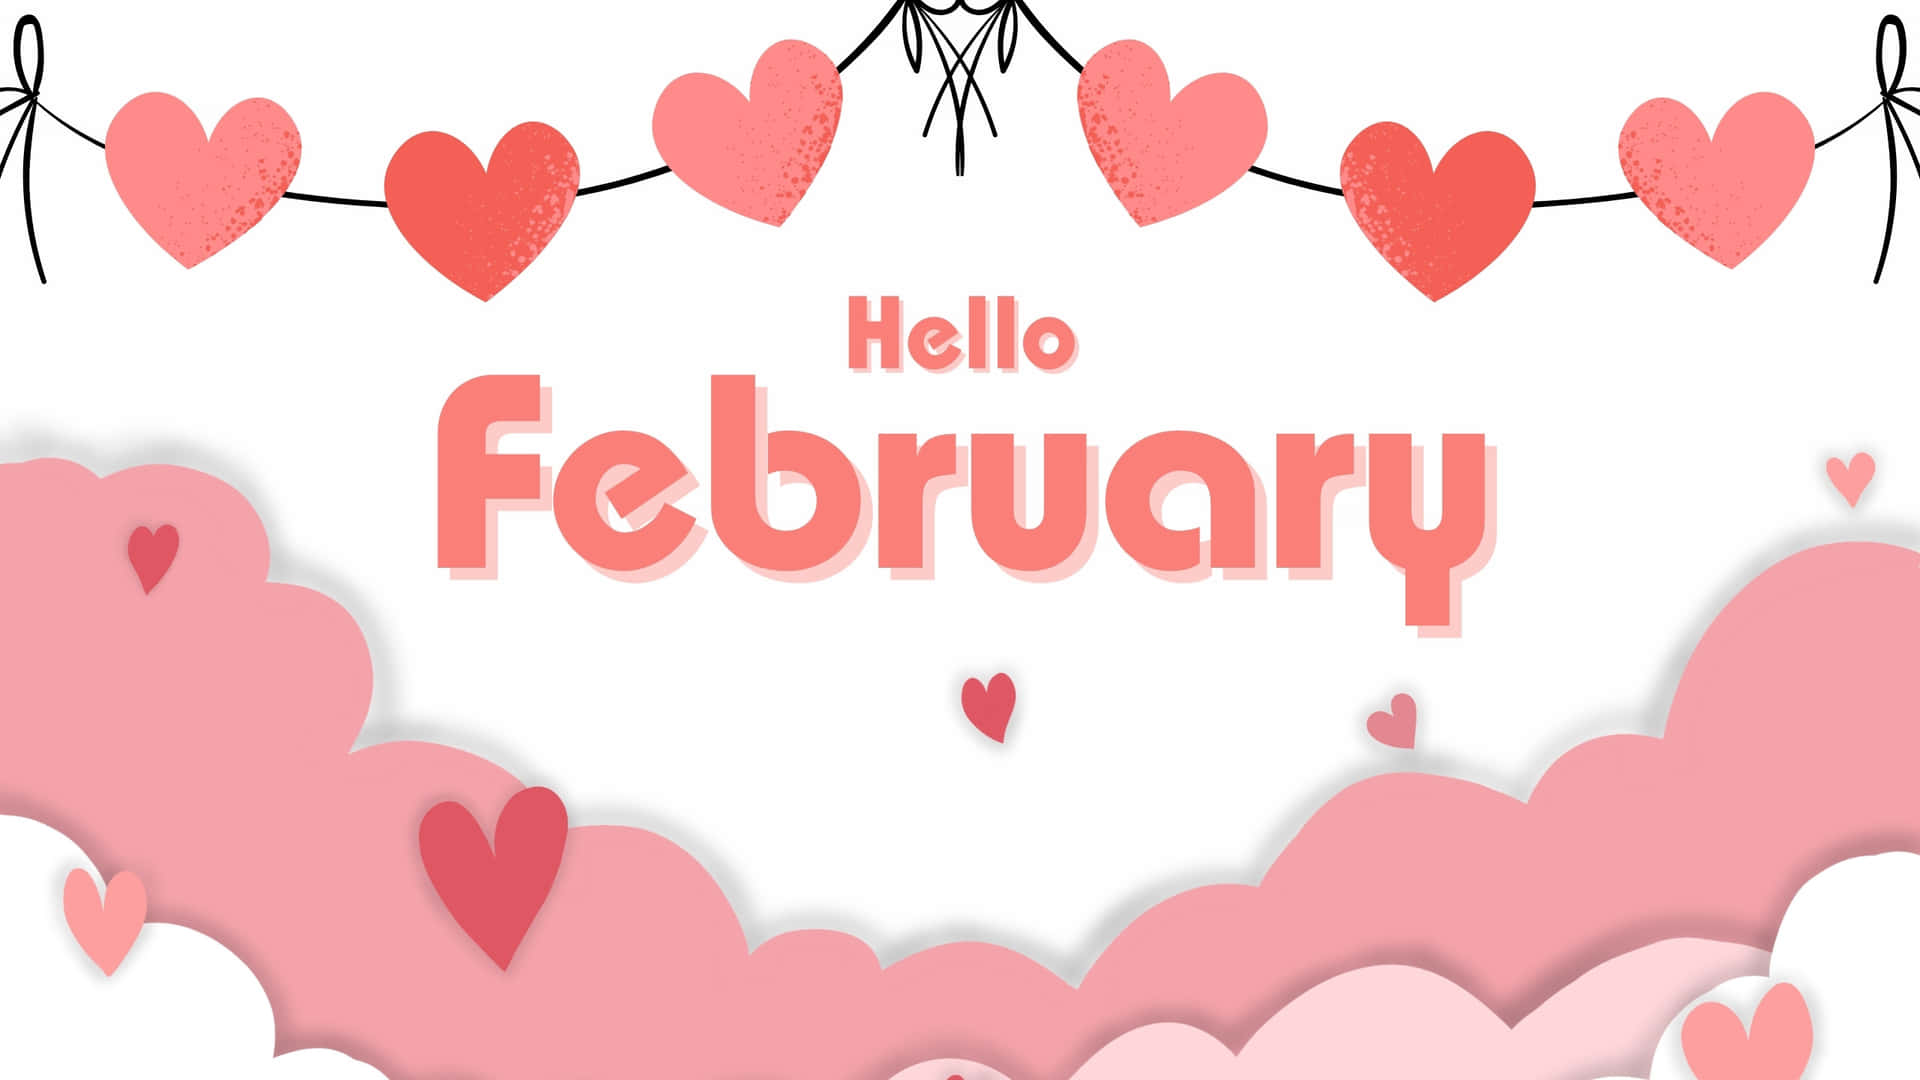 Hello February Hearts Banner Wallpaper